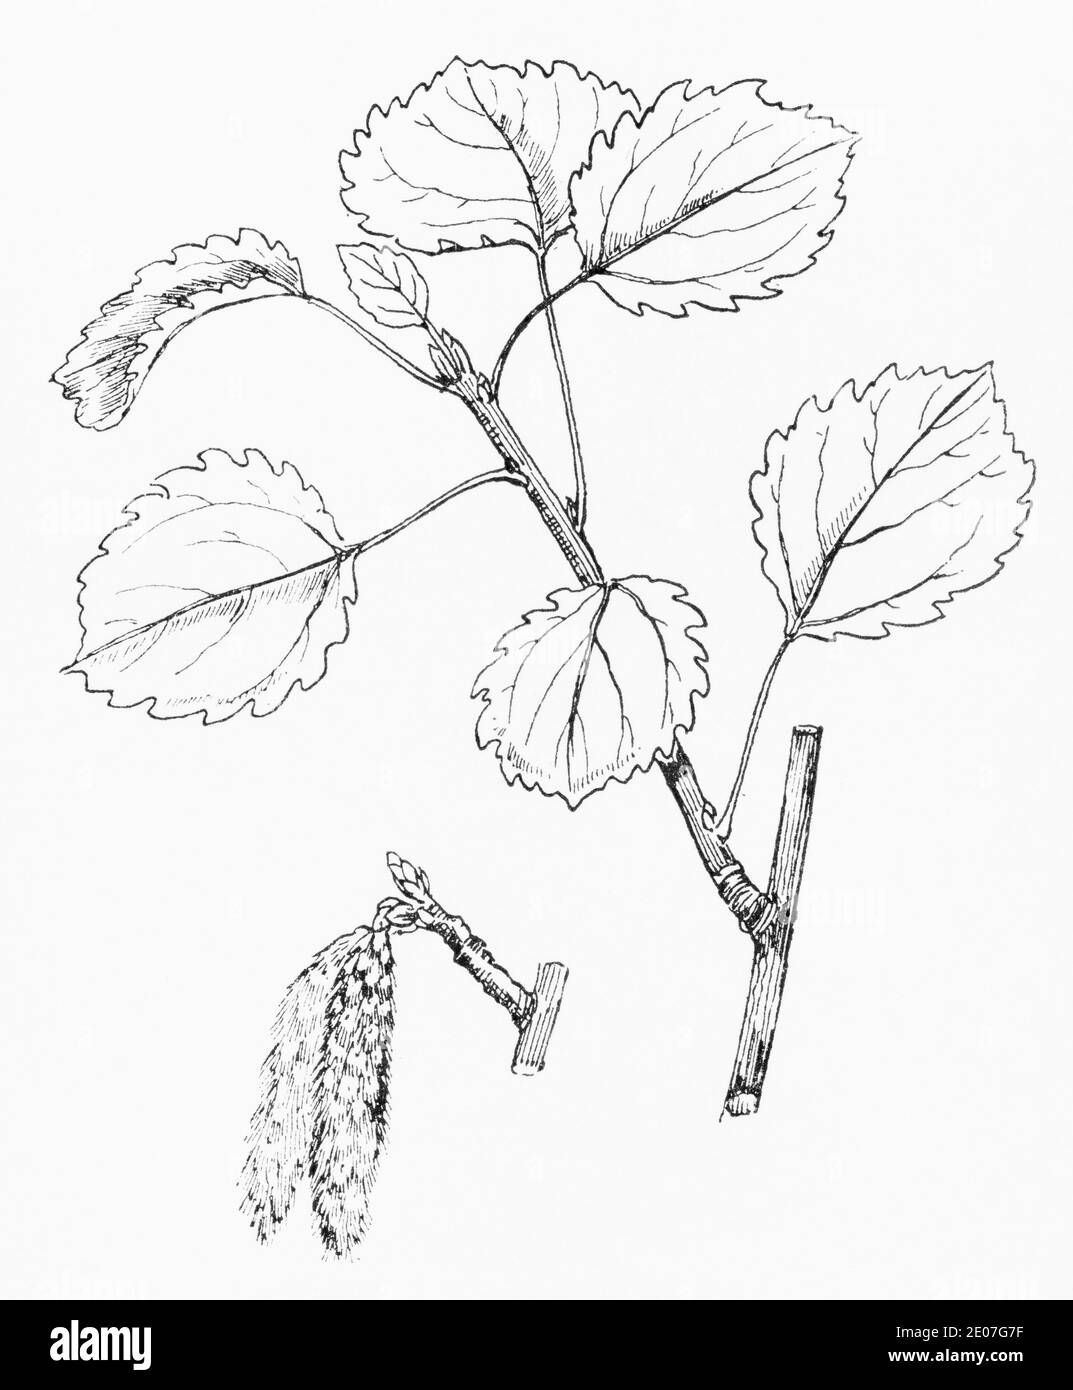 Old botanical illustration engraving of Aspen / Populus tremula. Traditional medicinal herbal plant. See Notes Stock Photo